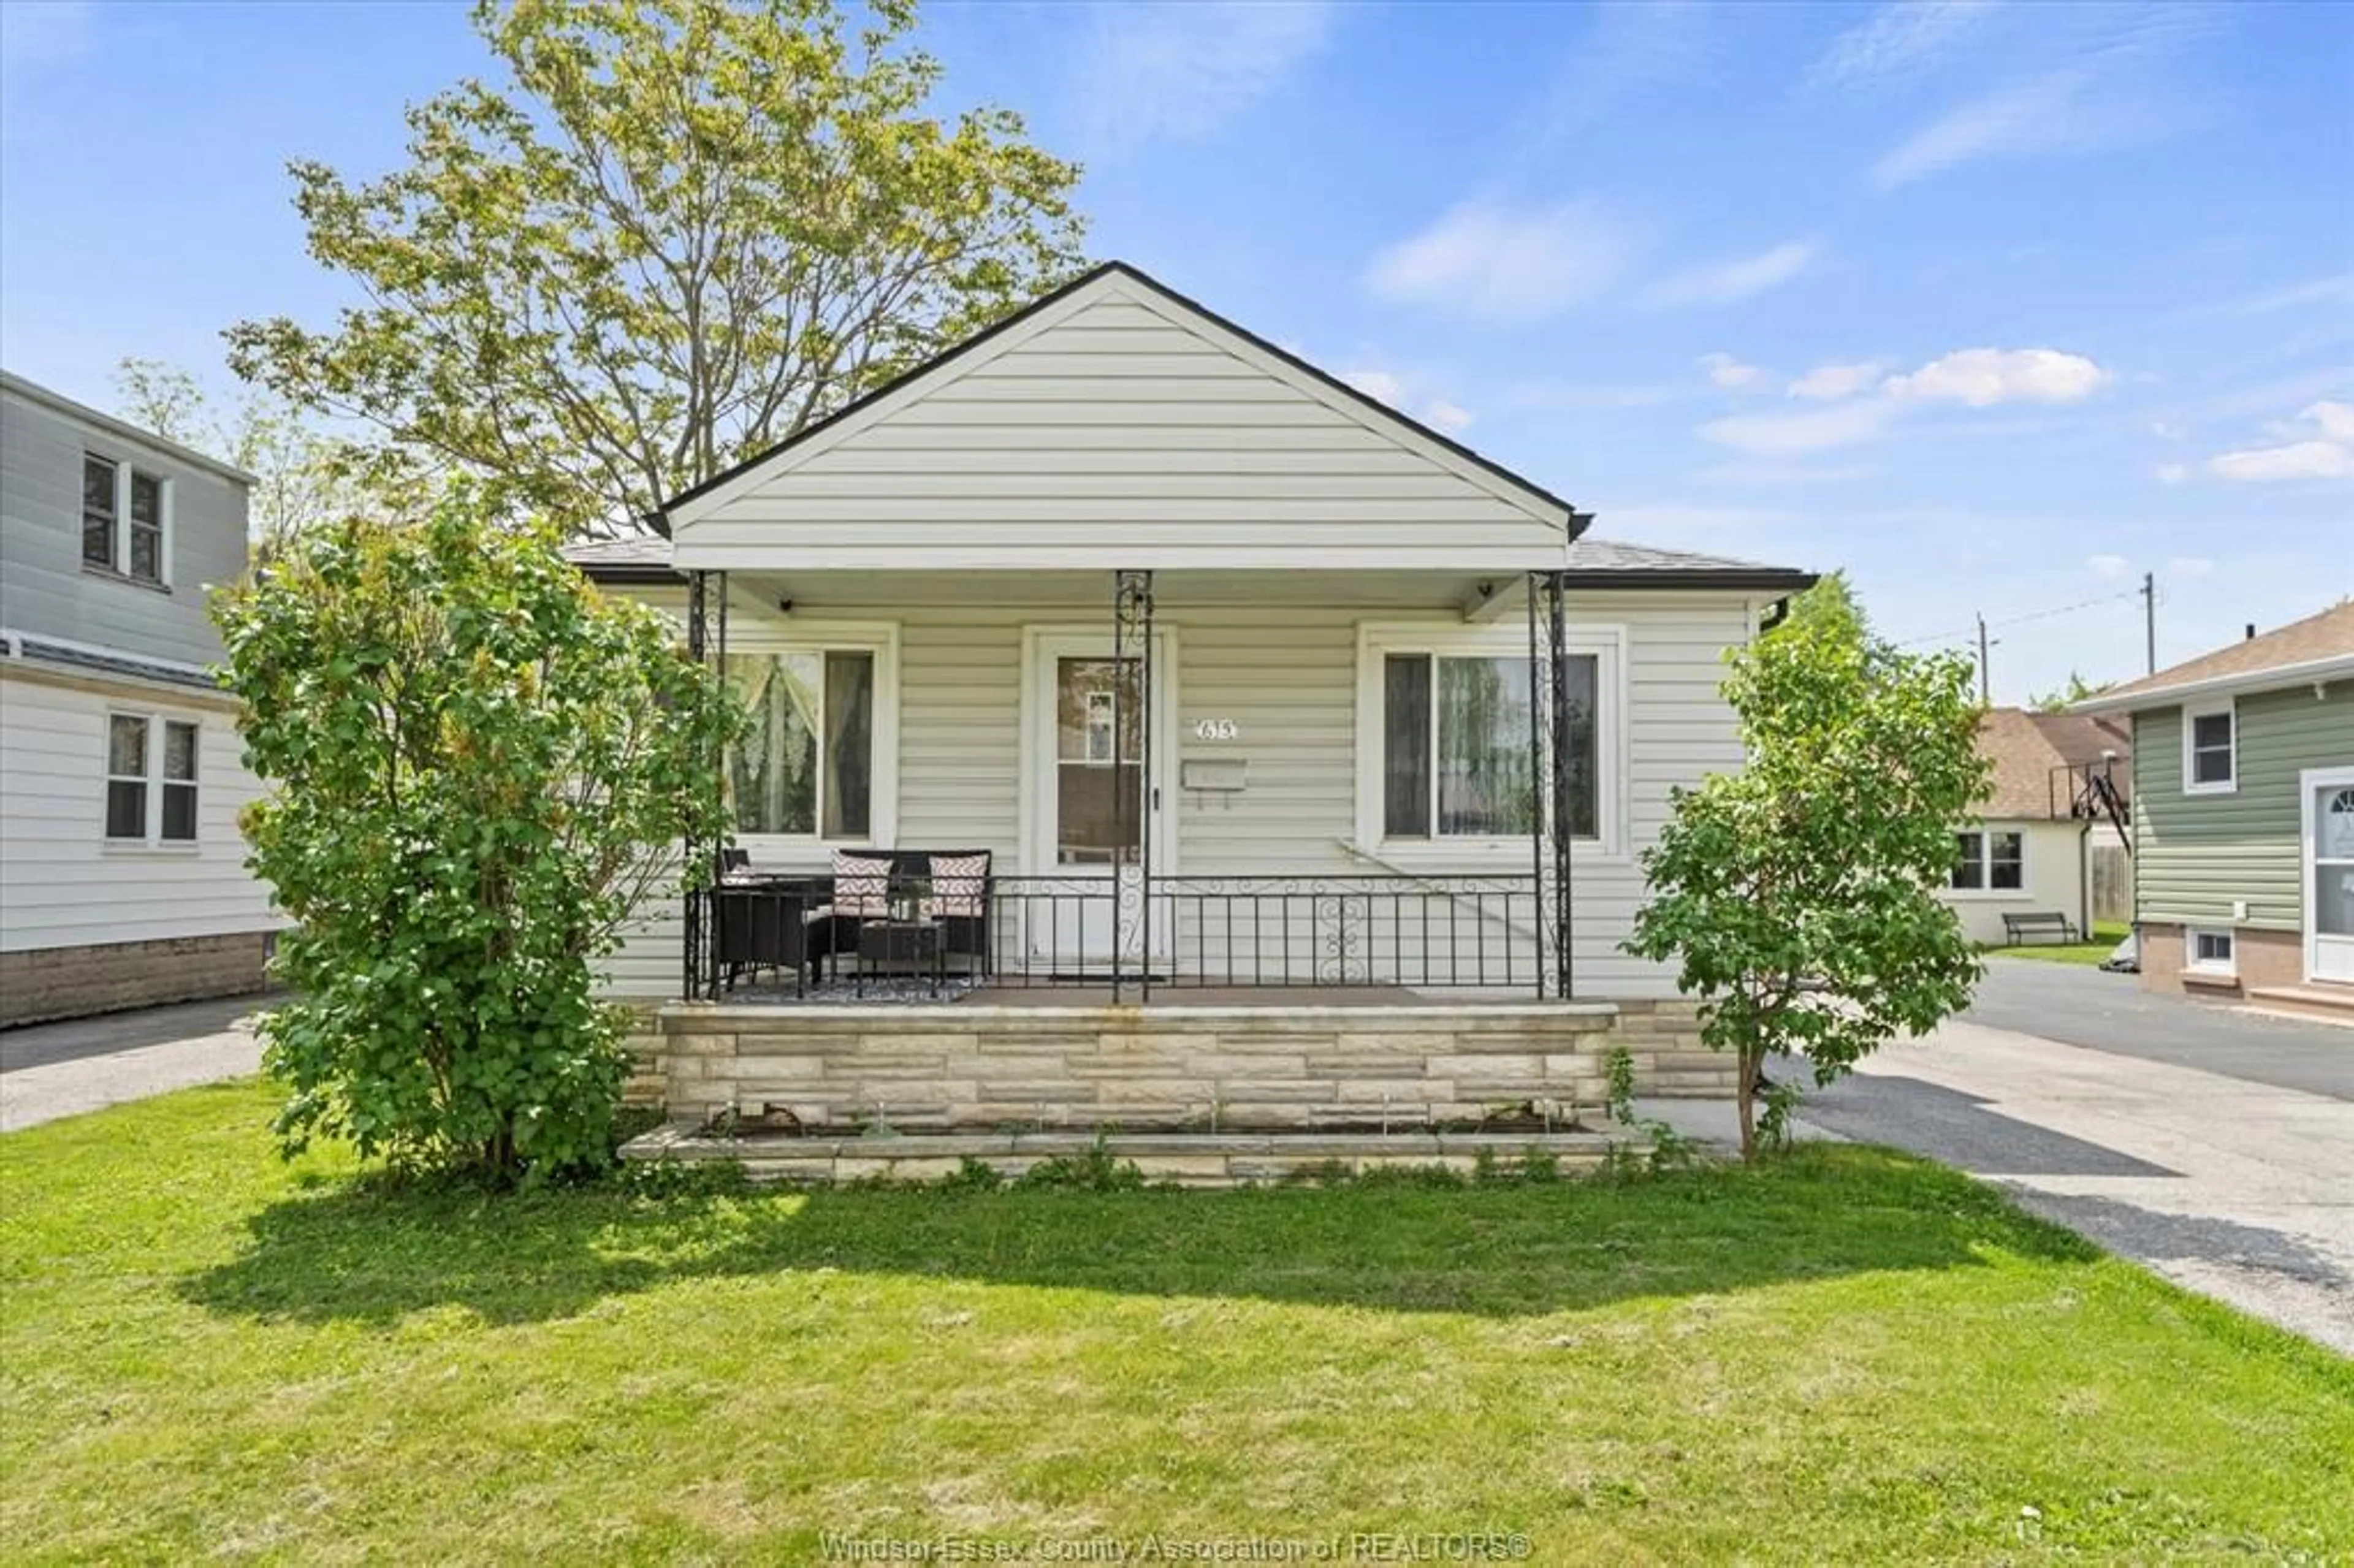 Cottage for 615 BENSETTE, Windsor Ontario N8X 2Y8